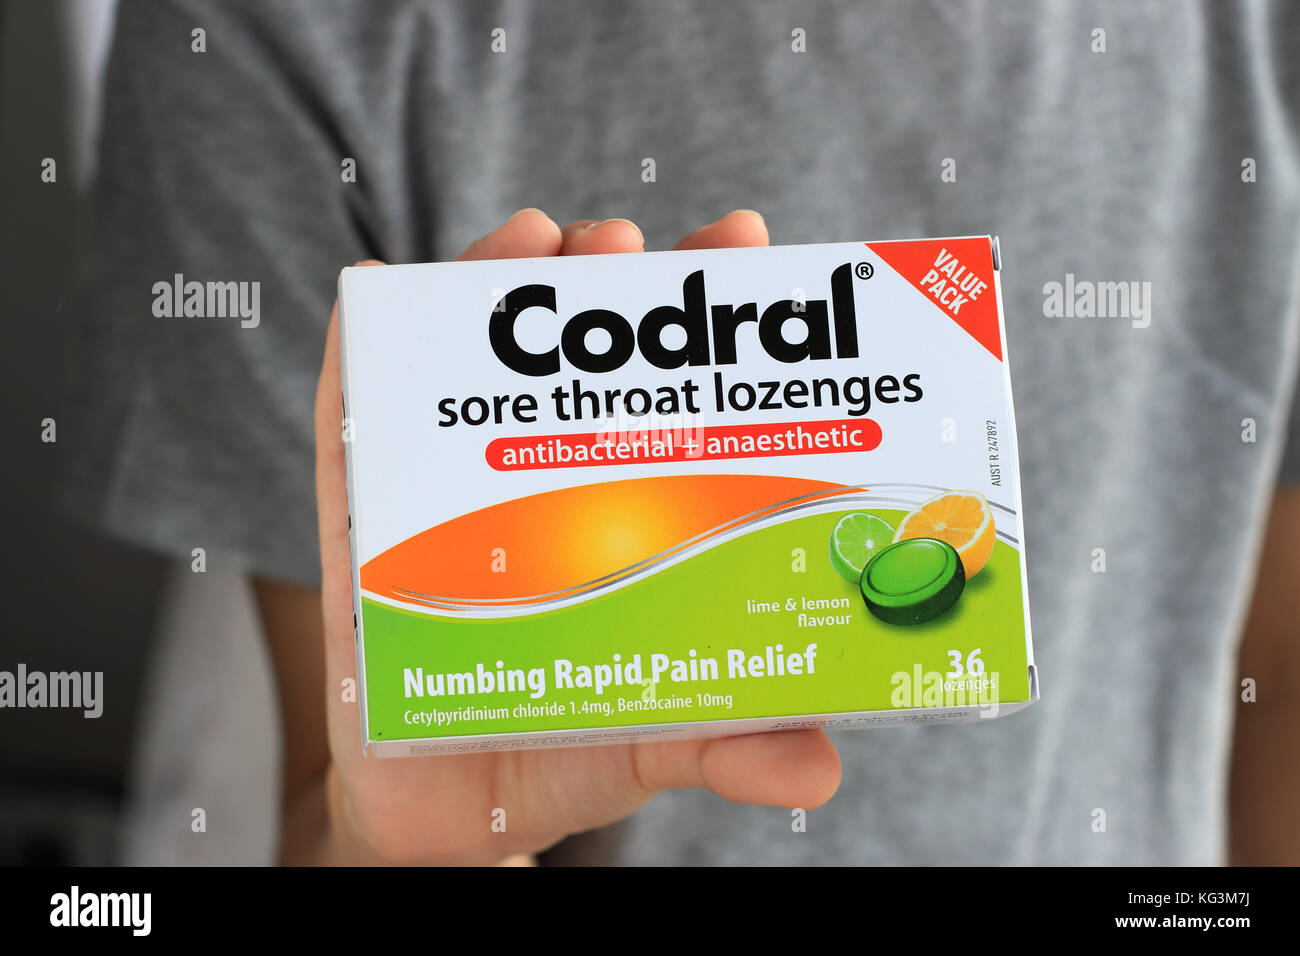 Codral Sore Throat lozenges Stock Photo